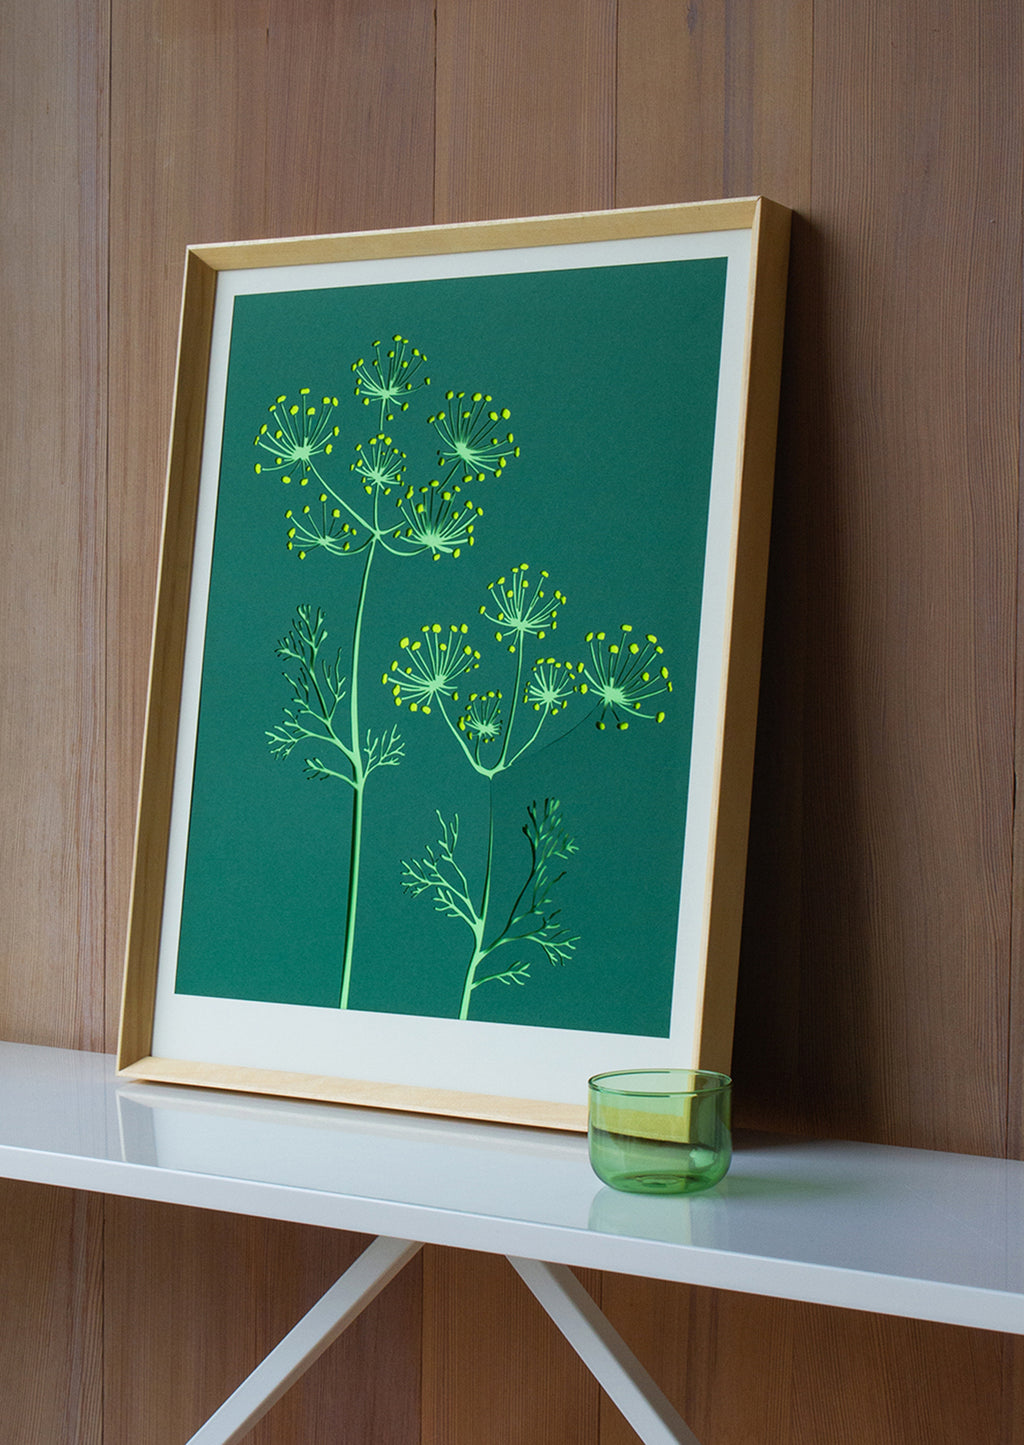 2: A lasercut art print depicting fennel flowers on dark green background.